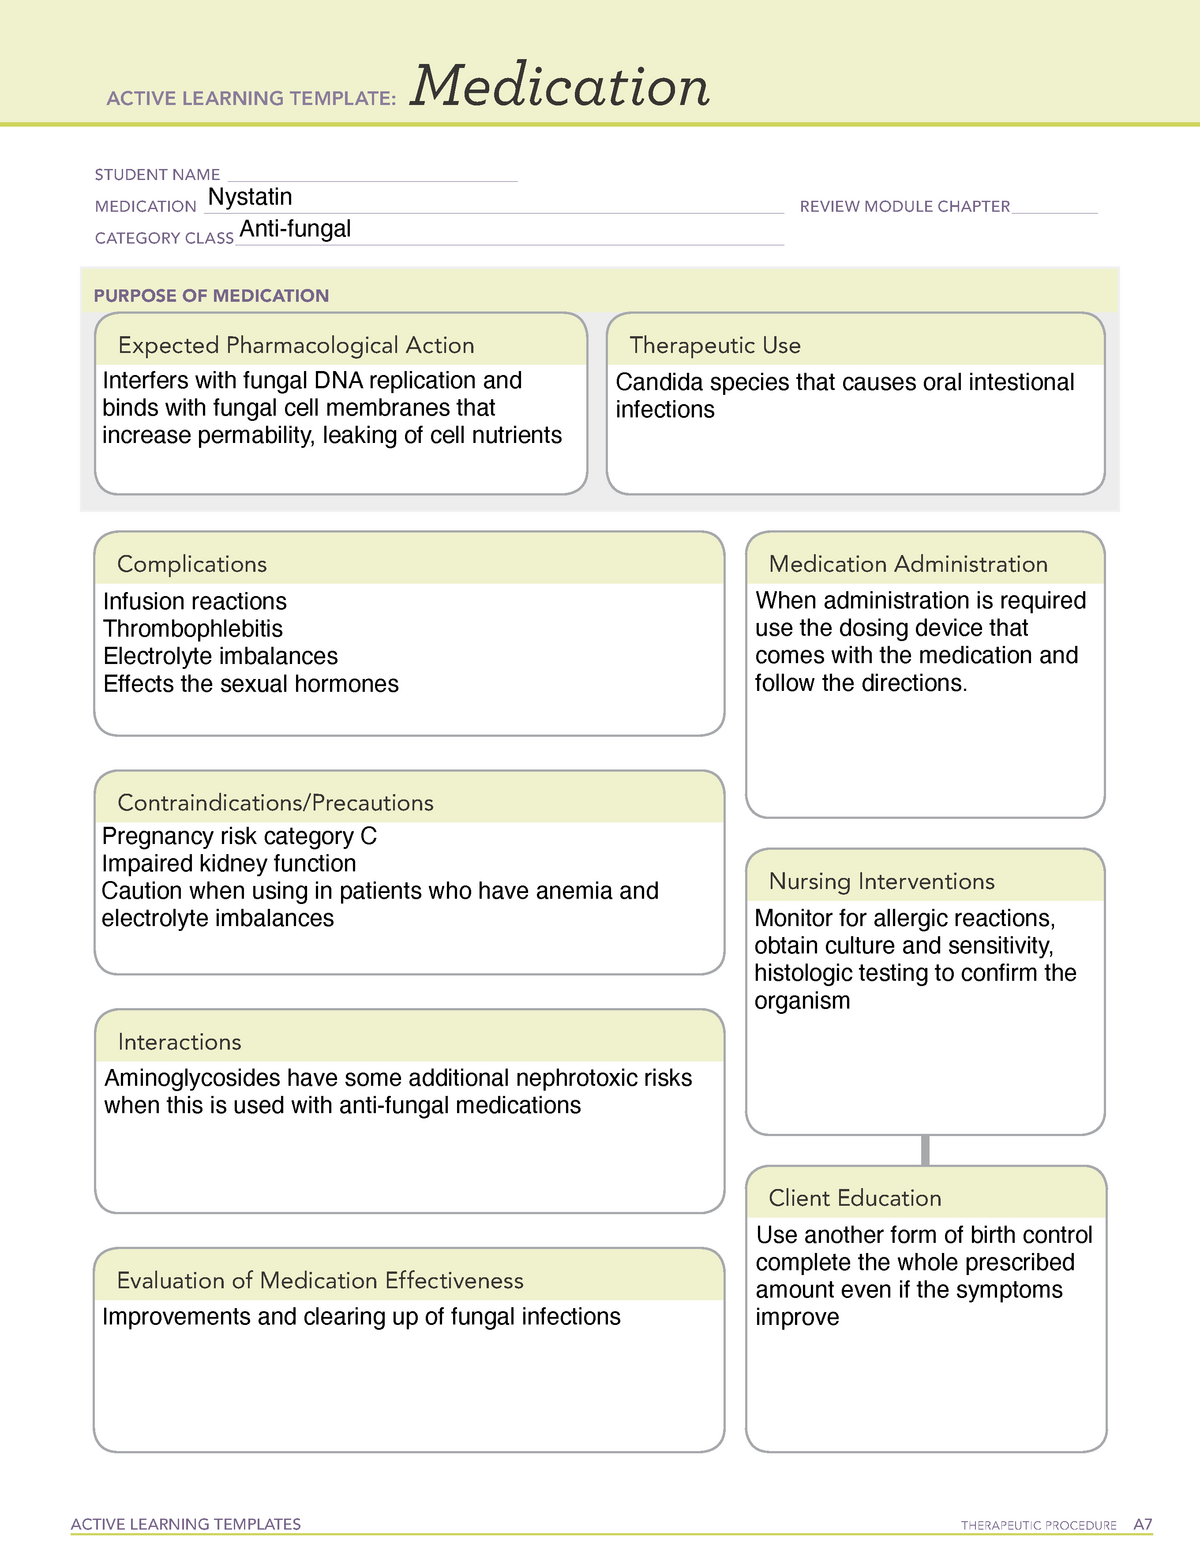 ati-medication-template-risperidone-active-learning-templates